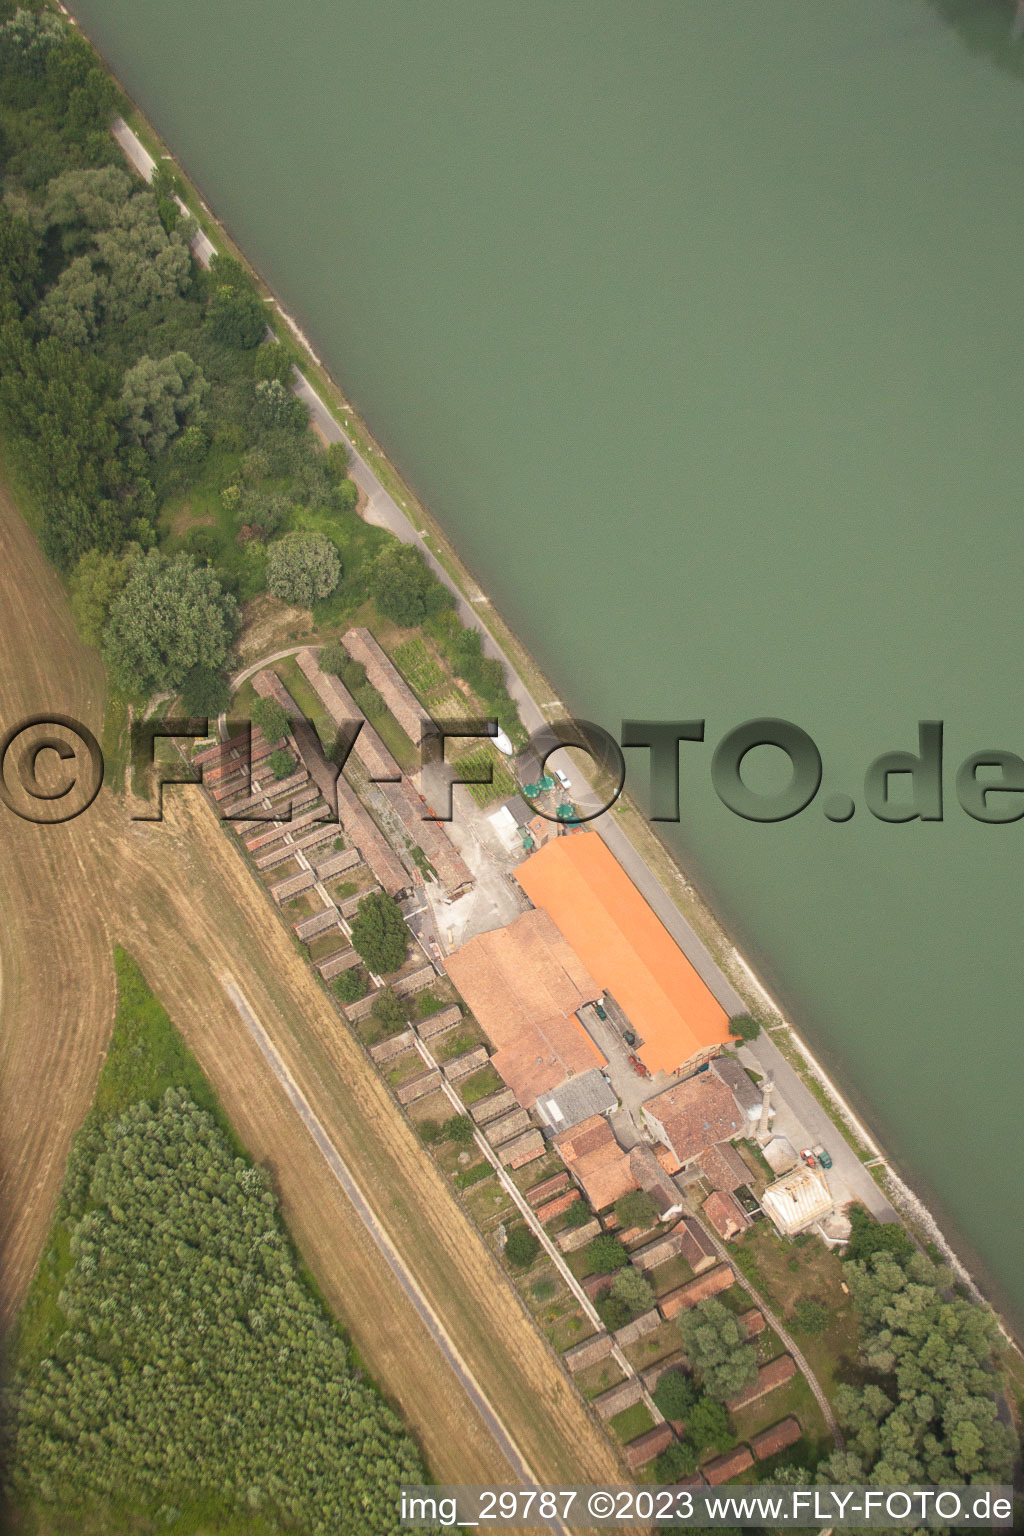 Aerial view of Old brickworks in the district Sondernheim in Germersheim in the state Rhineland-Palatinate, Germany